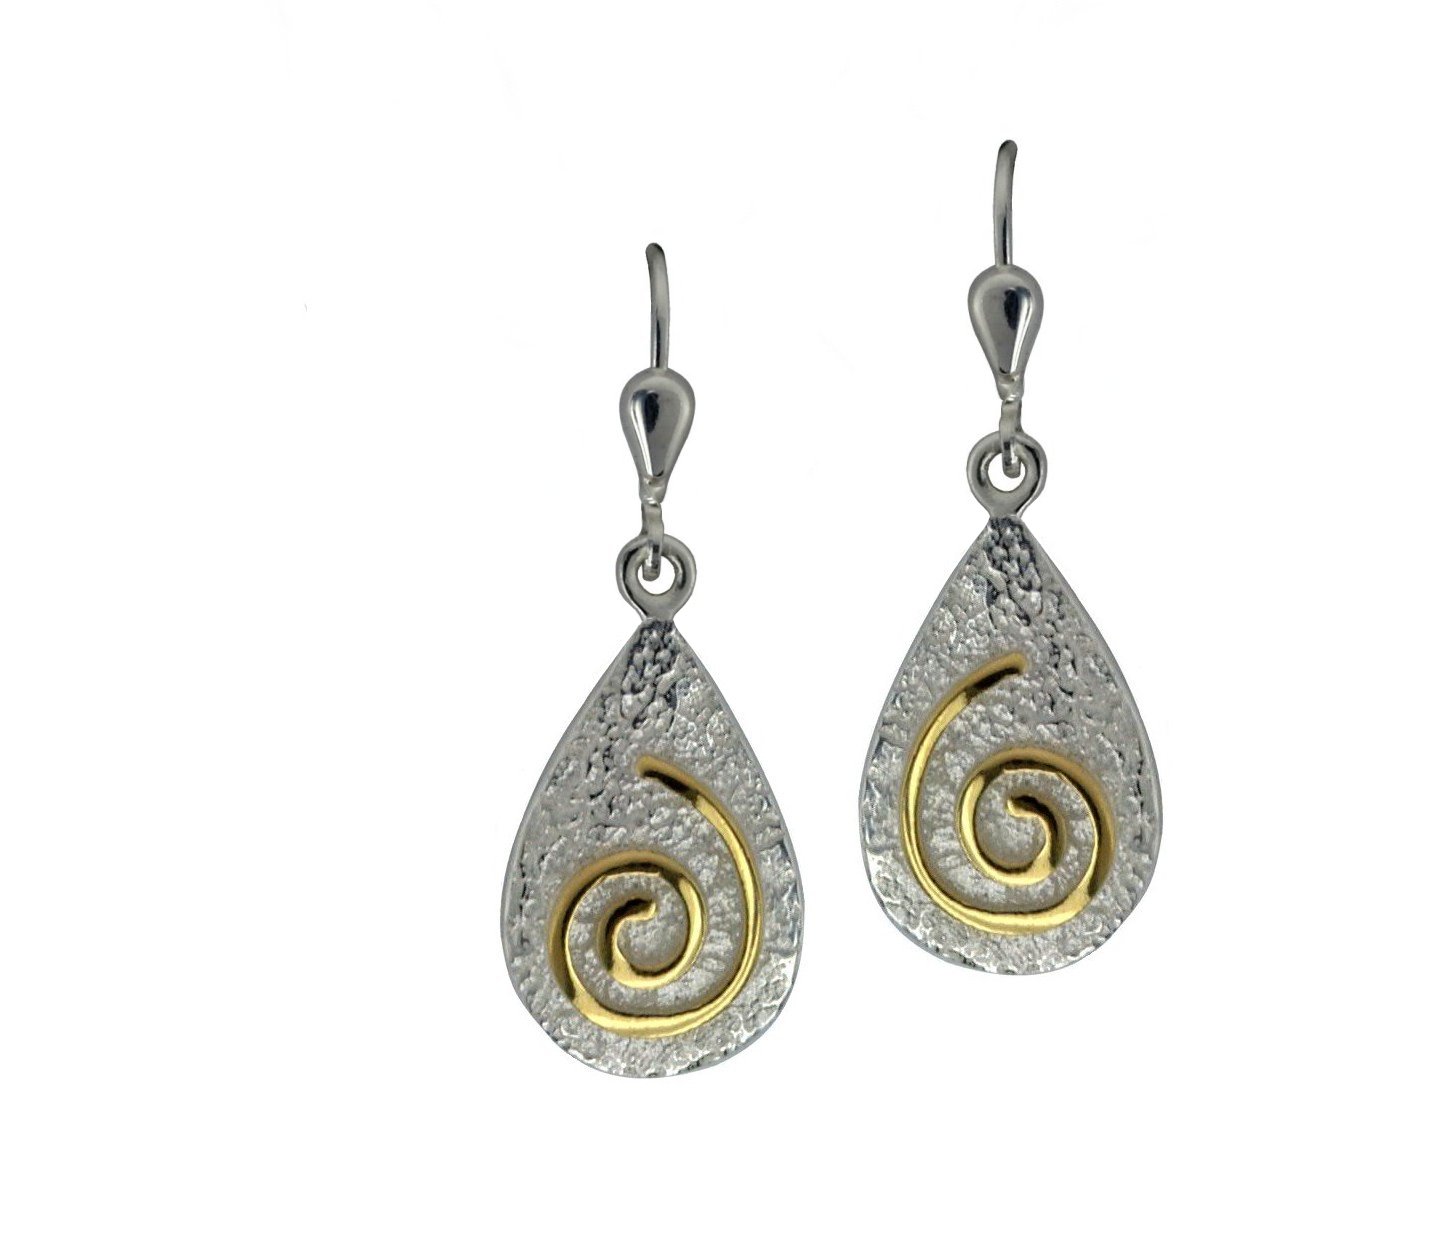 Product image for Irish Earrings - Sterling Silver Newgrange Spiral Earrings